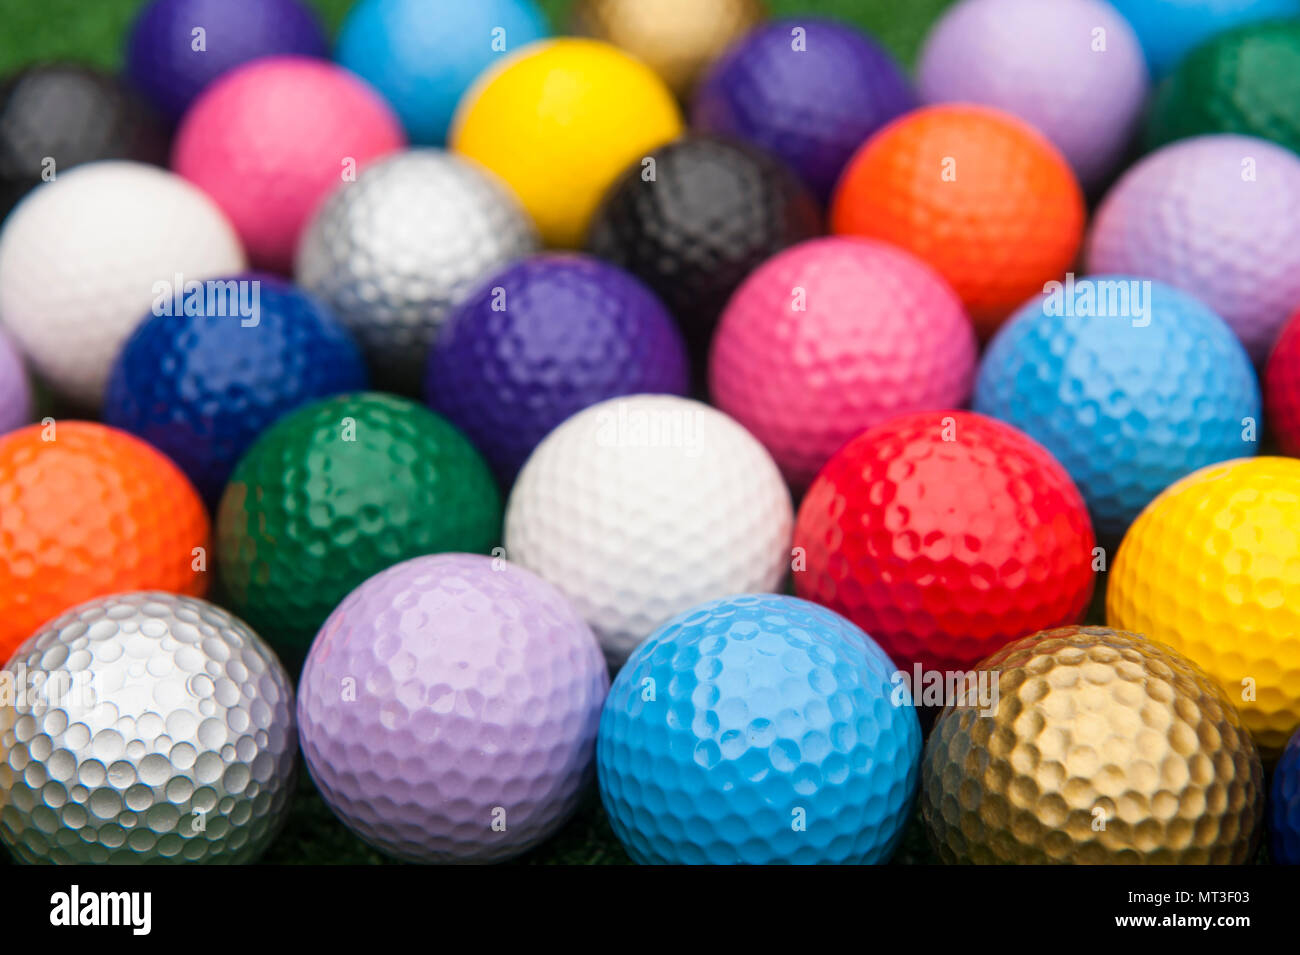 Assortment of colorful mini golf or putt putt balls Stock Photo